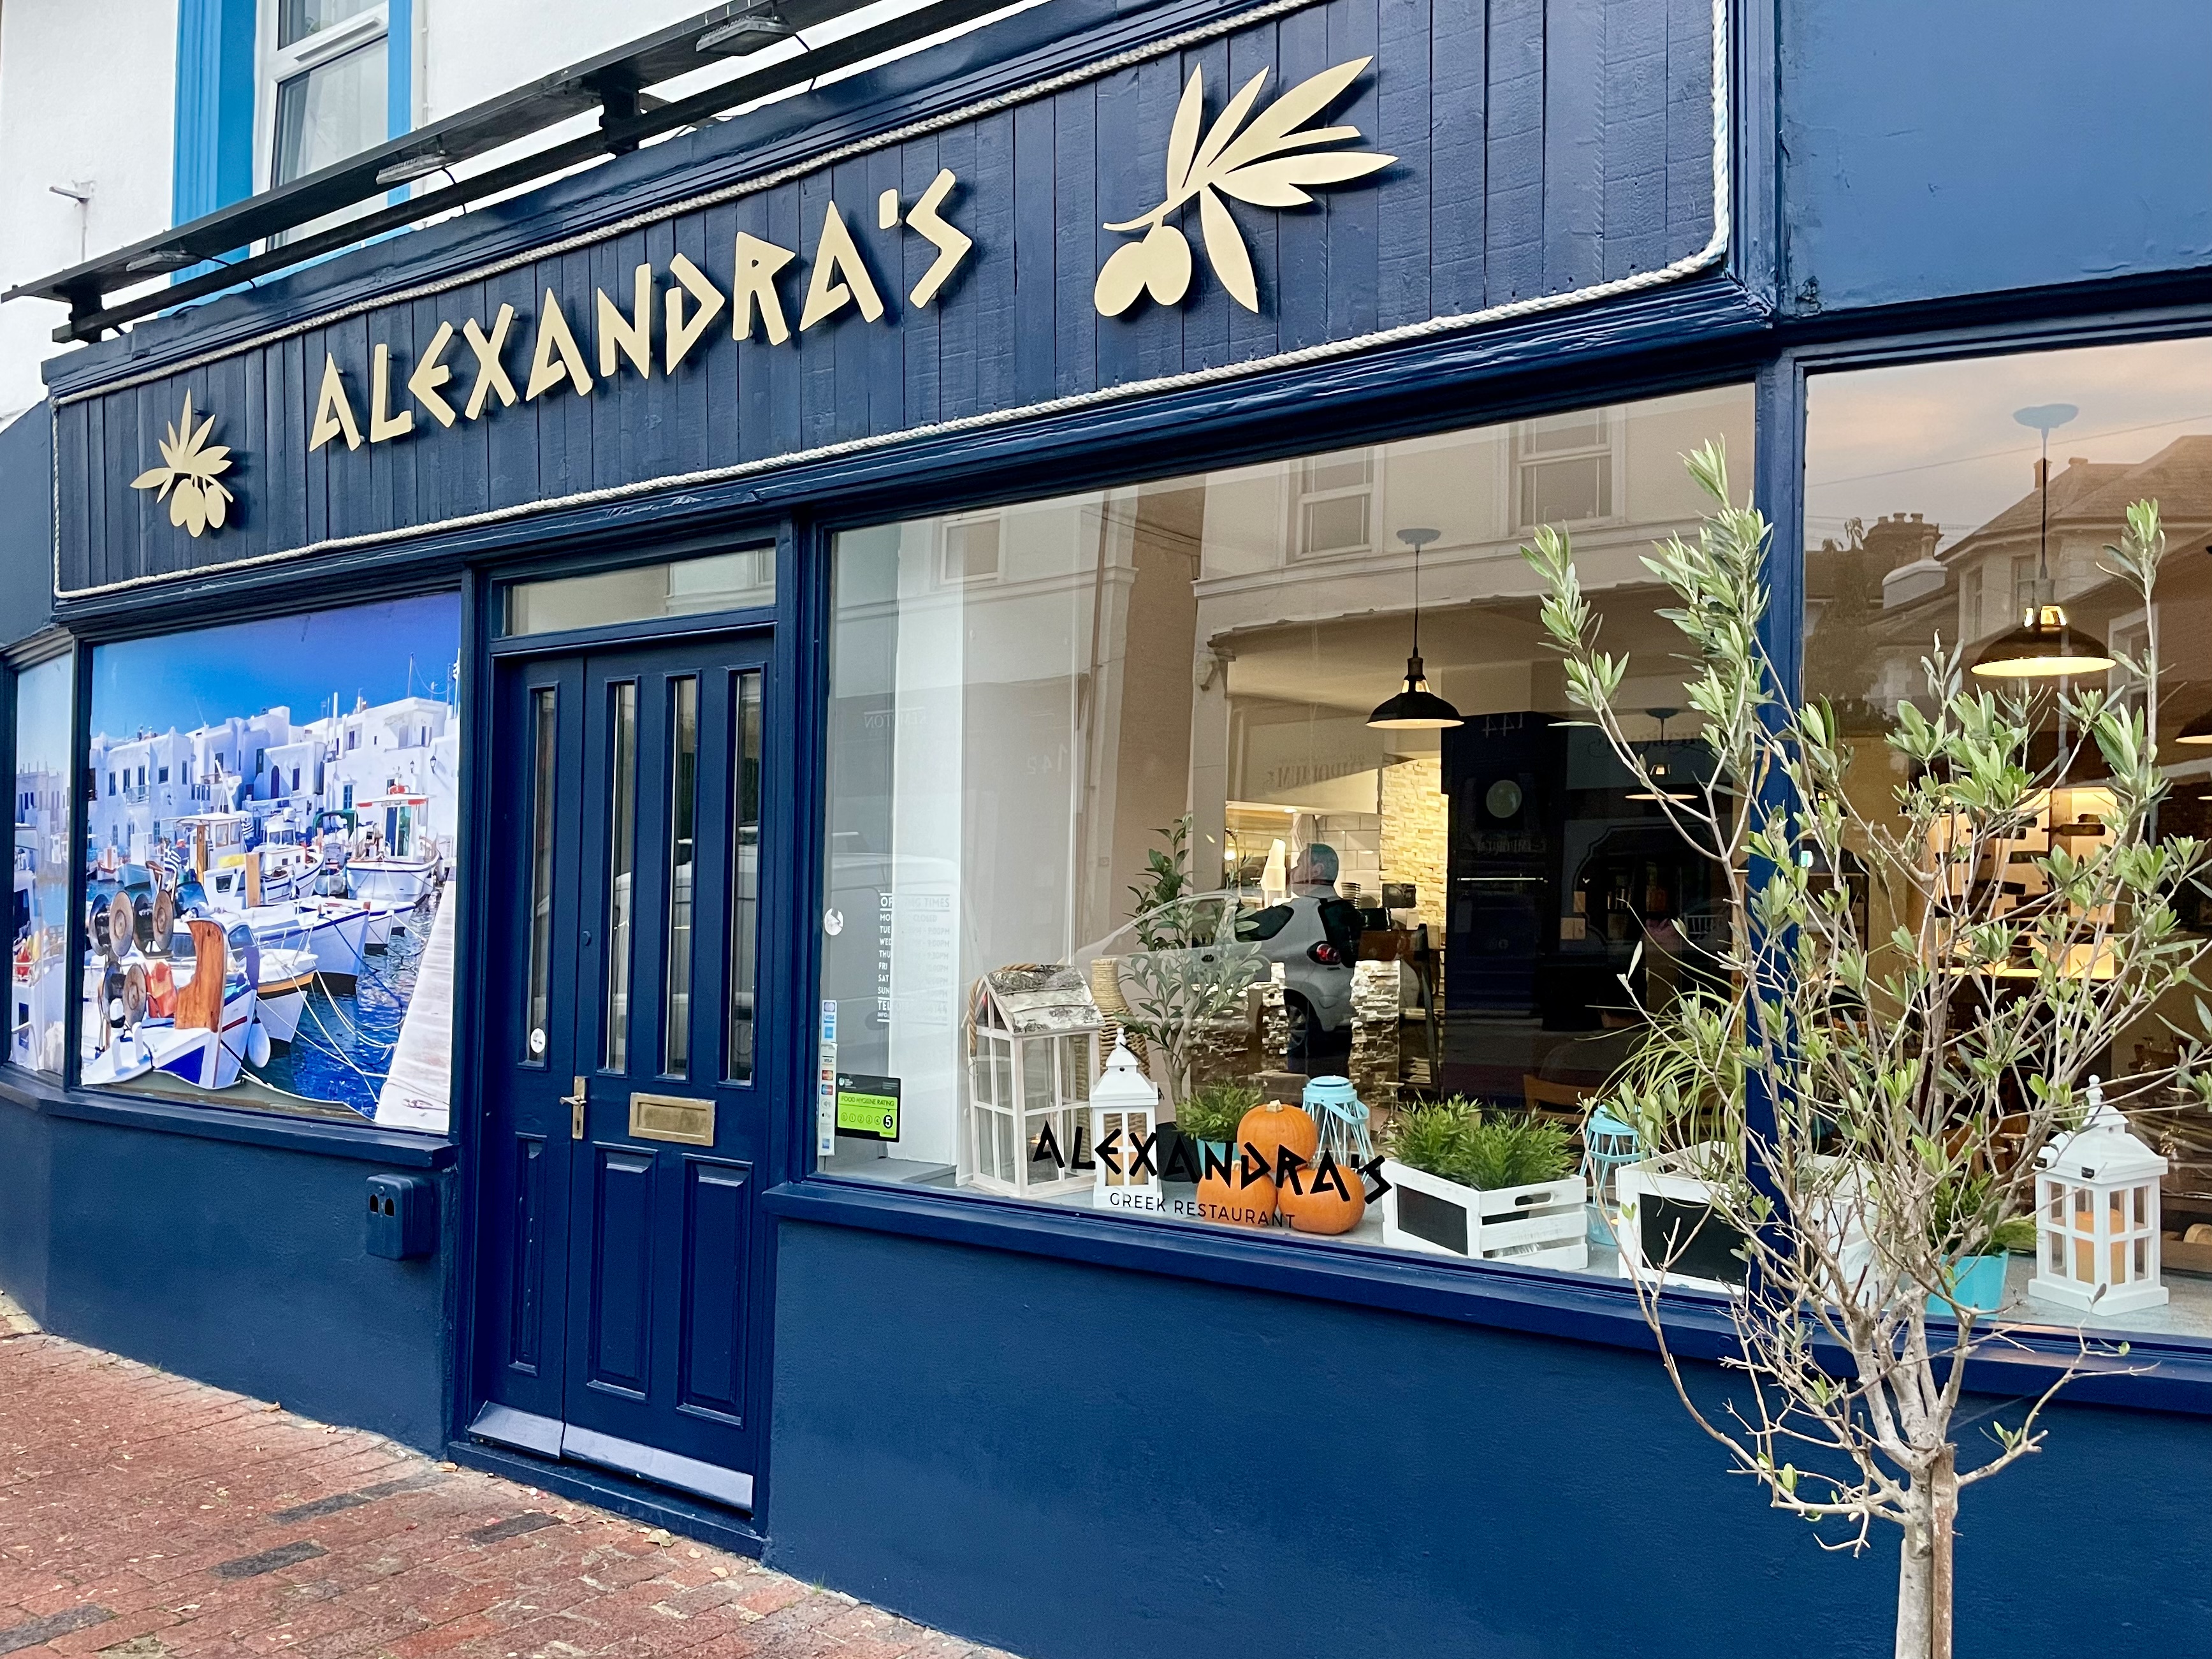 Alexandra's